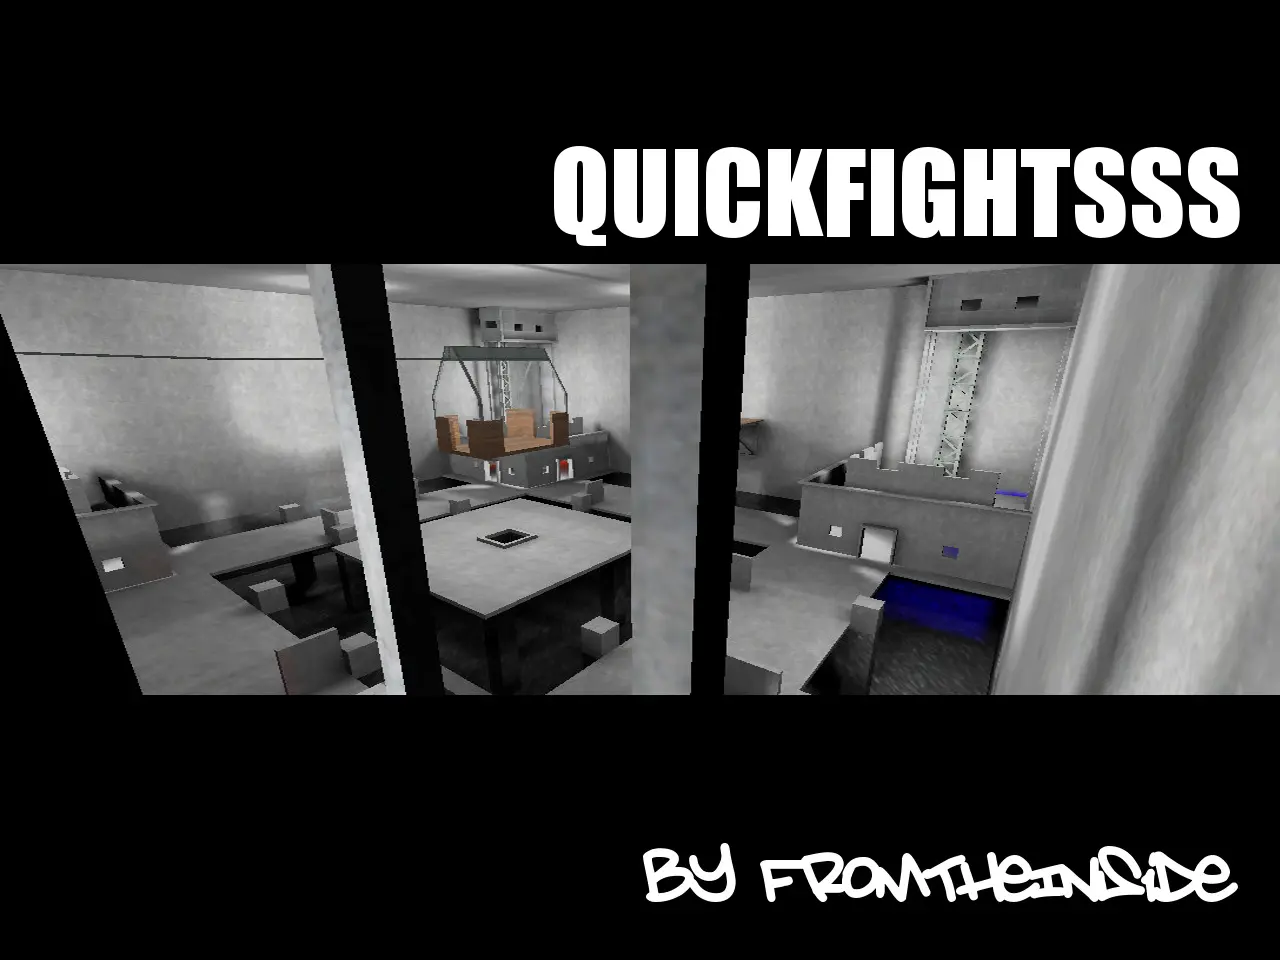 ut4_quickfightsss